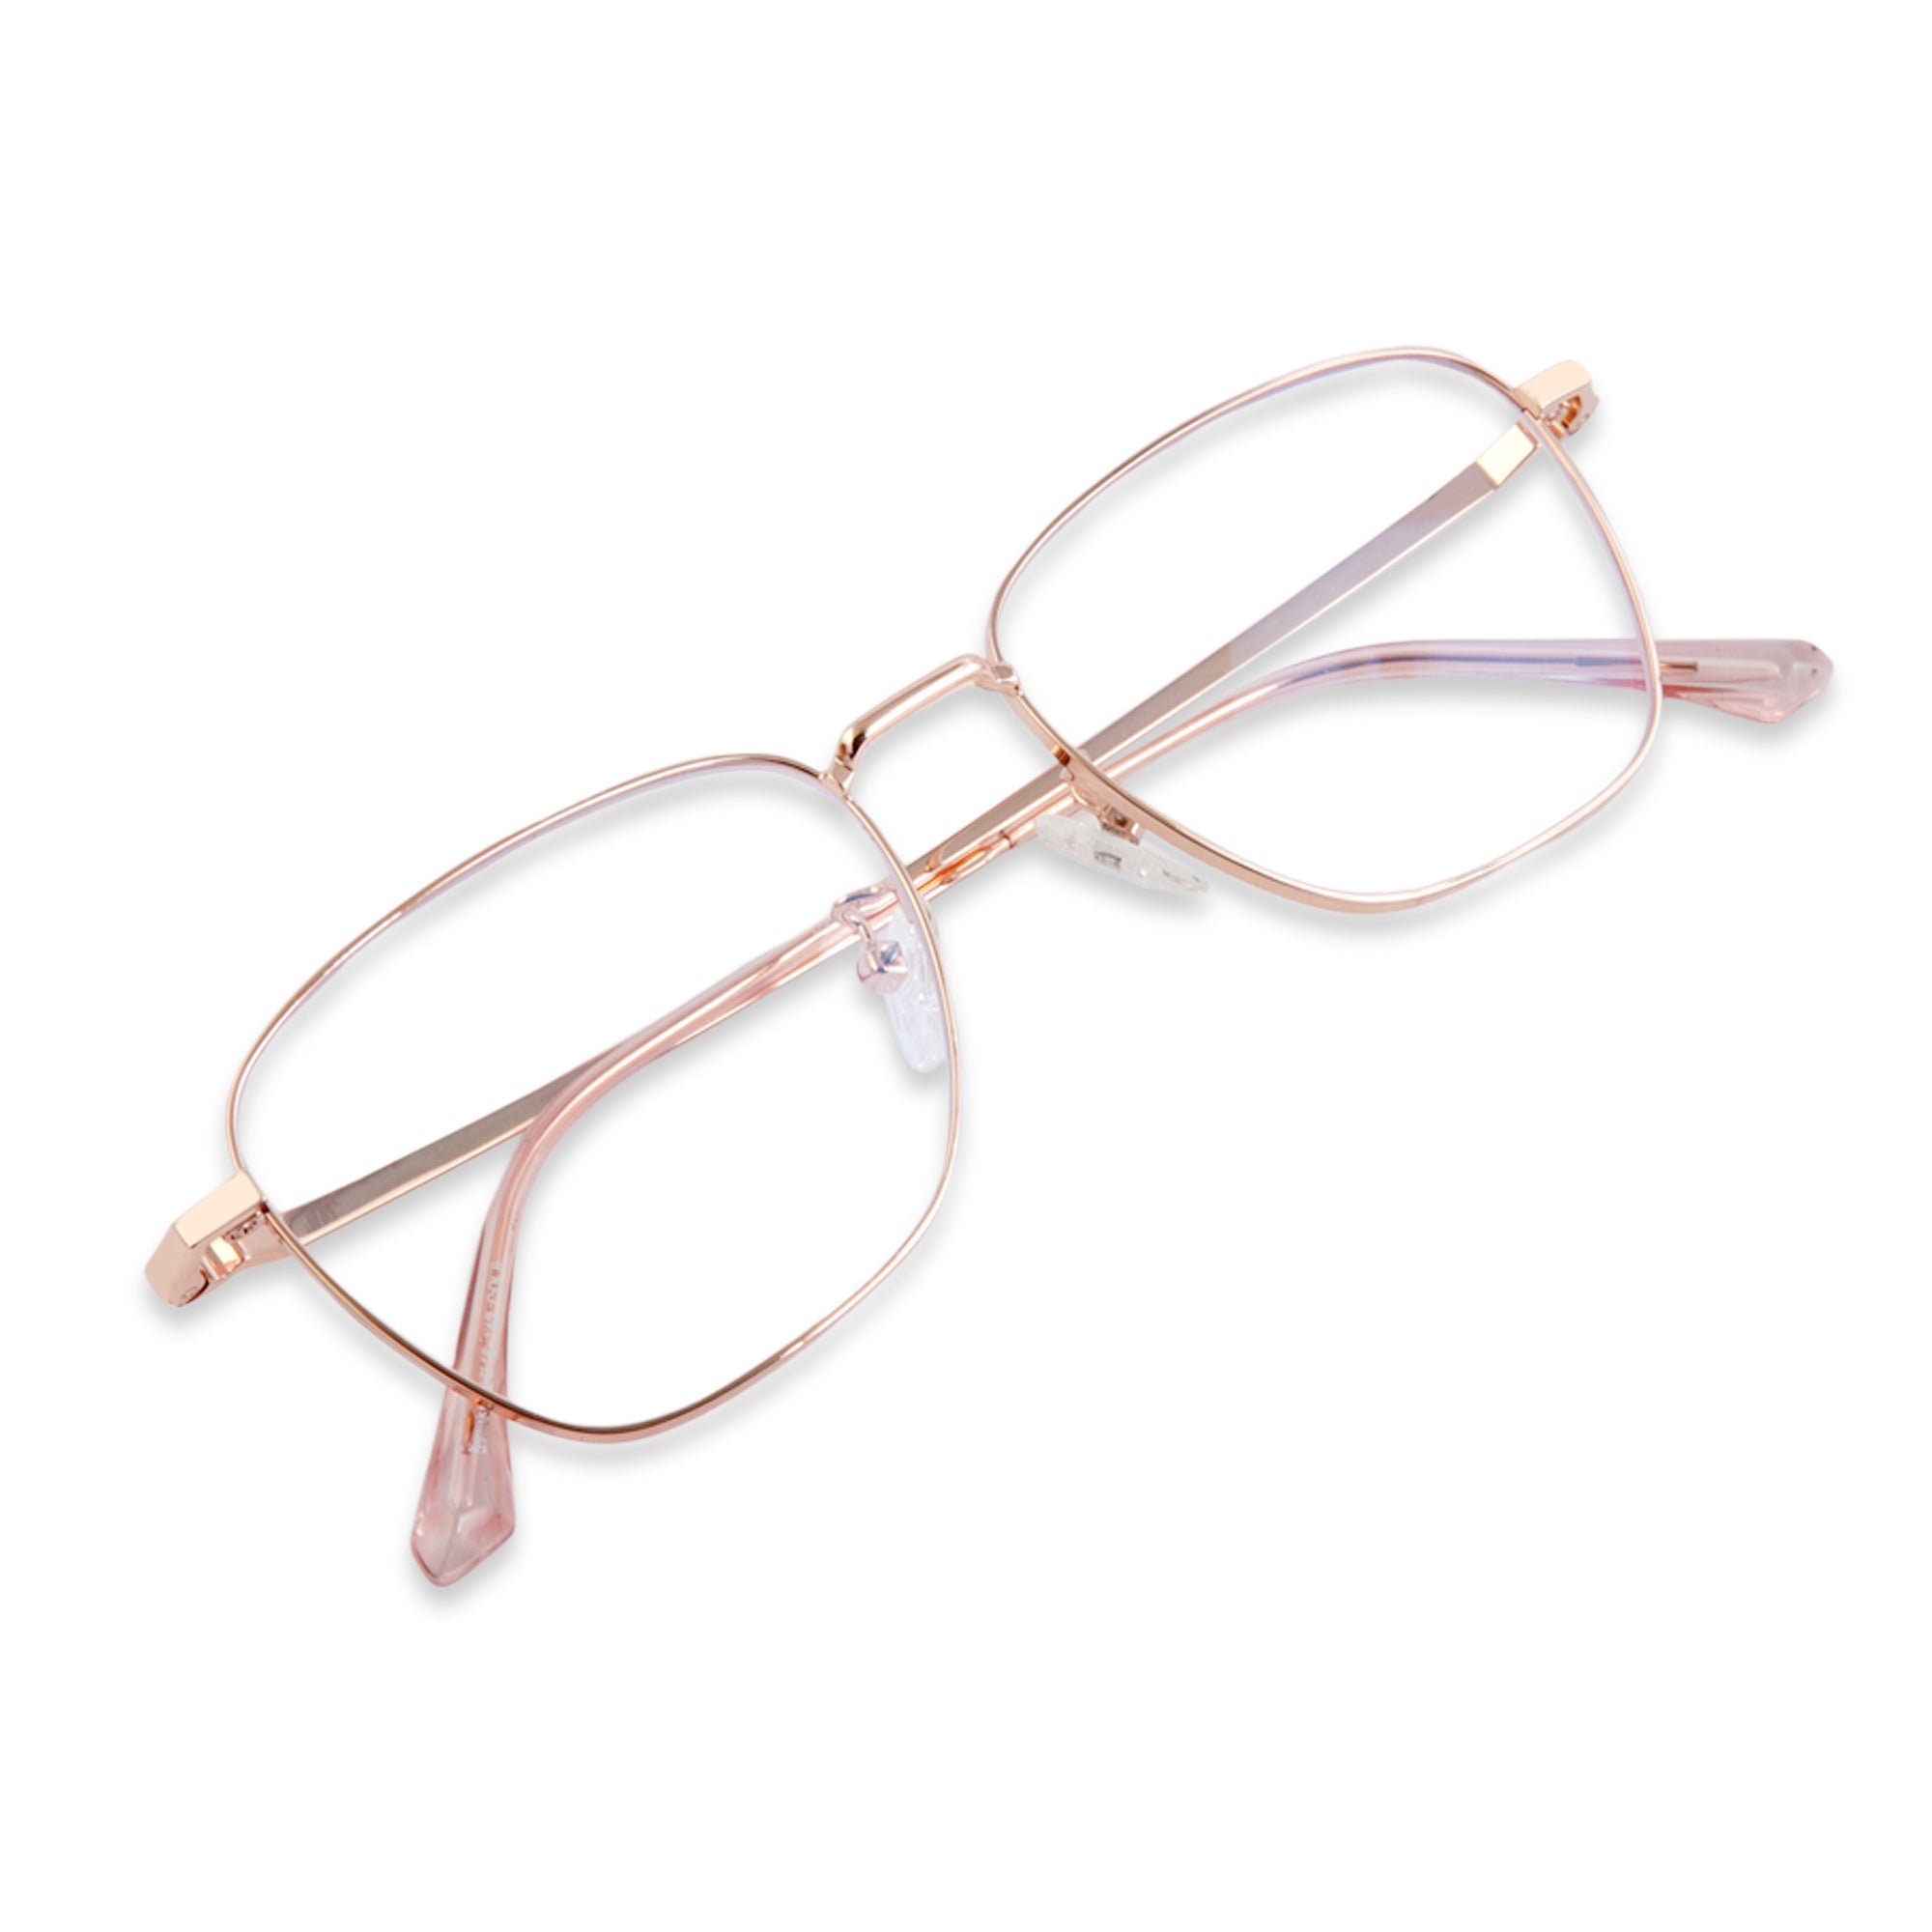 Gold Square Metal Eyeglasses - L51003